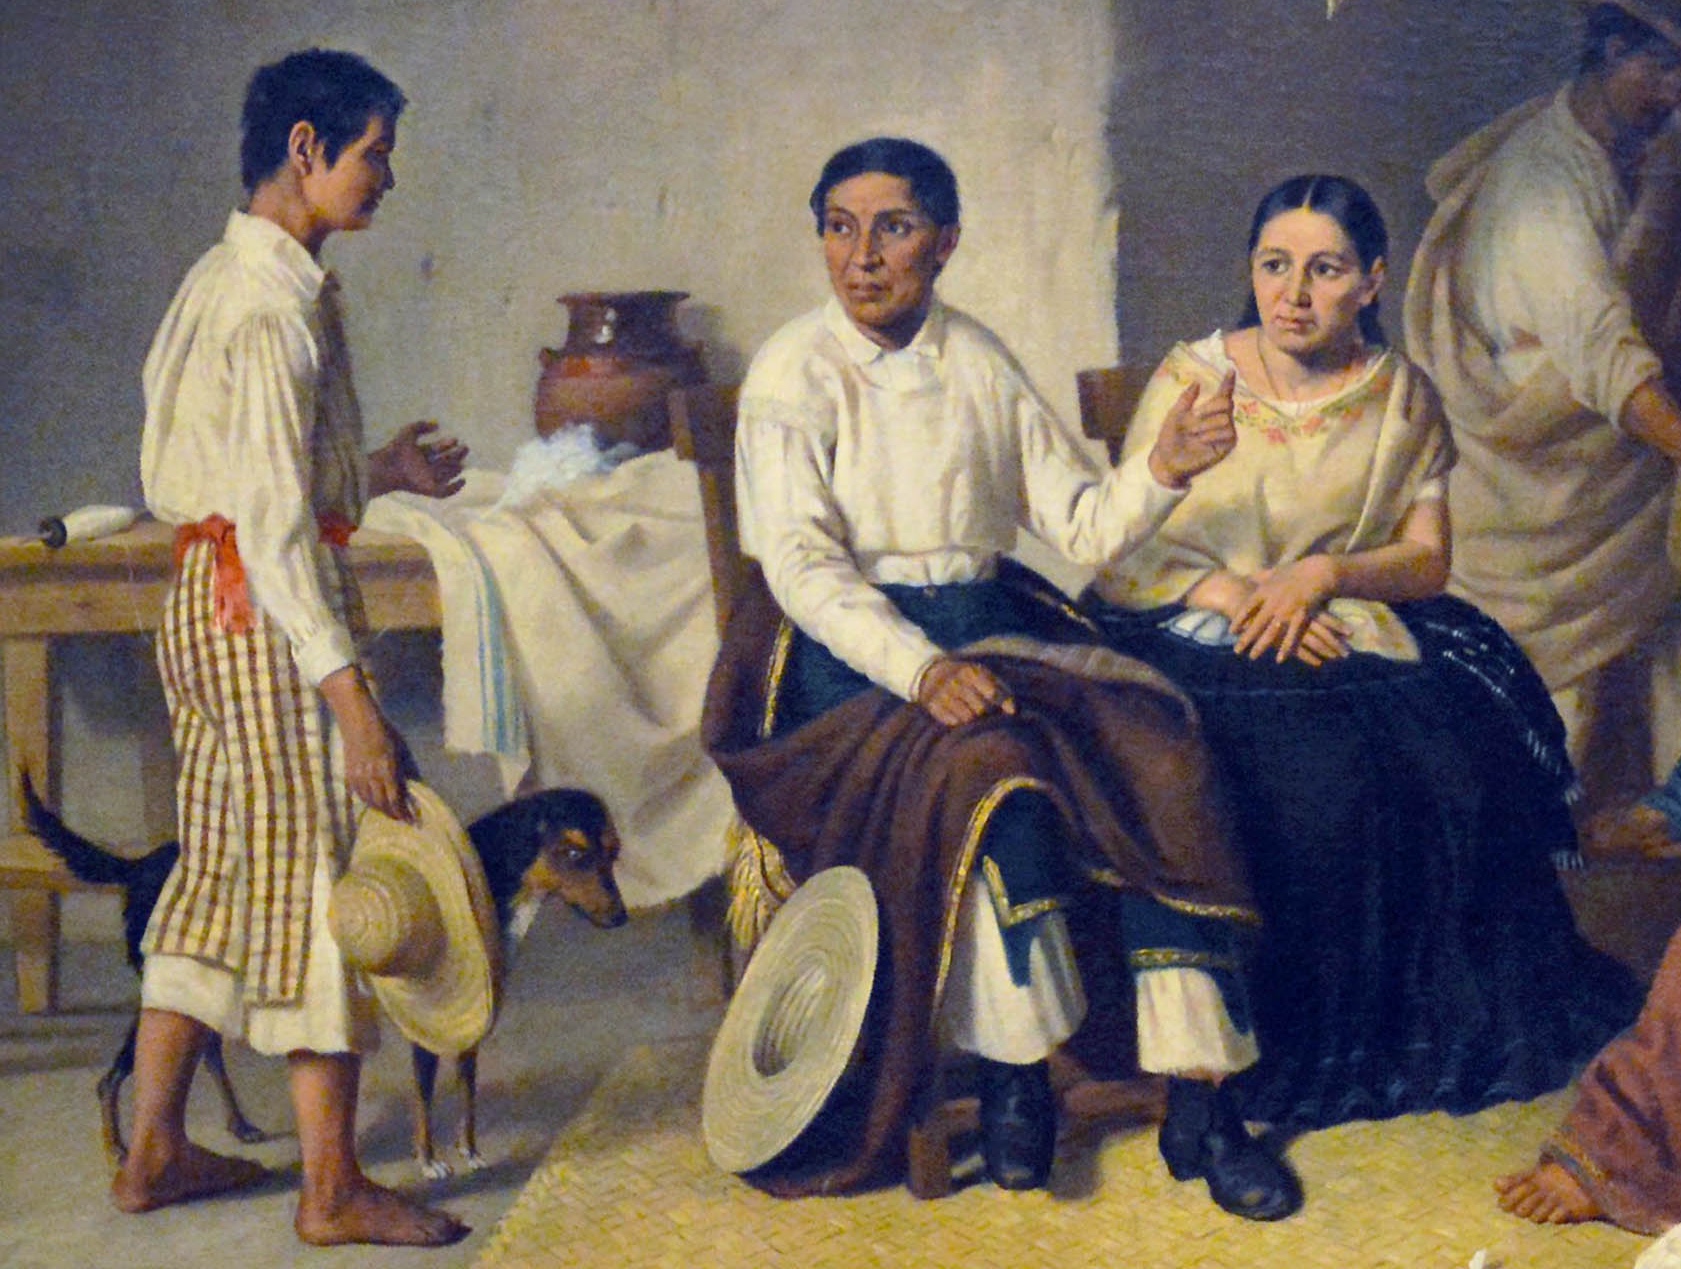 Felipe Santiago Gutiérrez, La despedida del jóven indio (The Young Indian’s Farewell), 1876, oil on canvas, 82 x 92 cm (Private Collection, Mexico City)